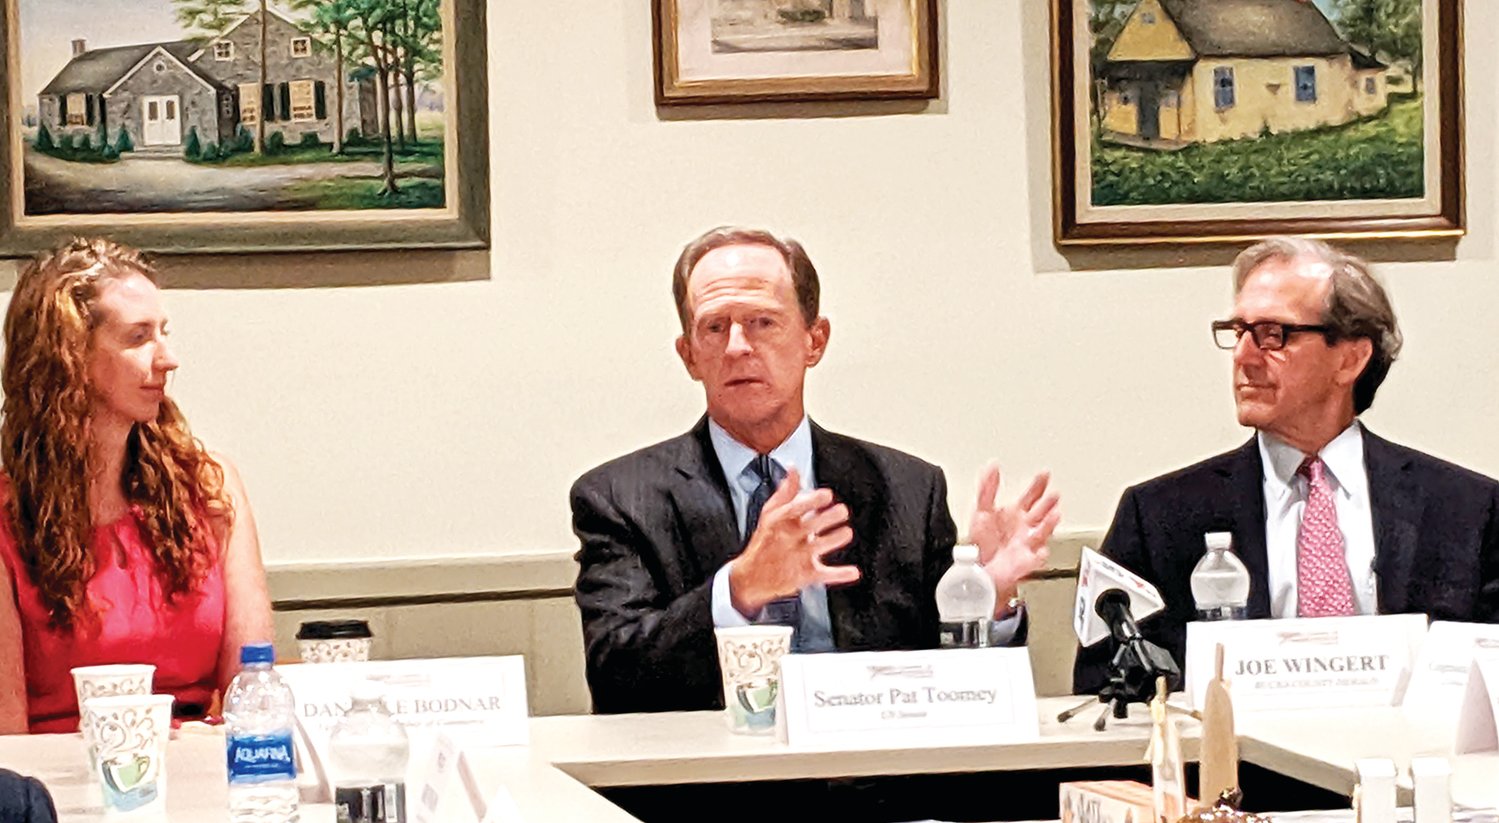 From left, Upper Bucks Chamber of Commerce Executive Director Daniella Bodnar, Pennsylvania Senator Pat Toomey, and UBCC President Joe Wingert.